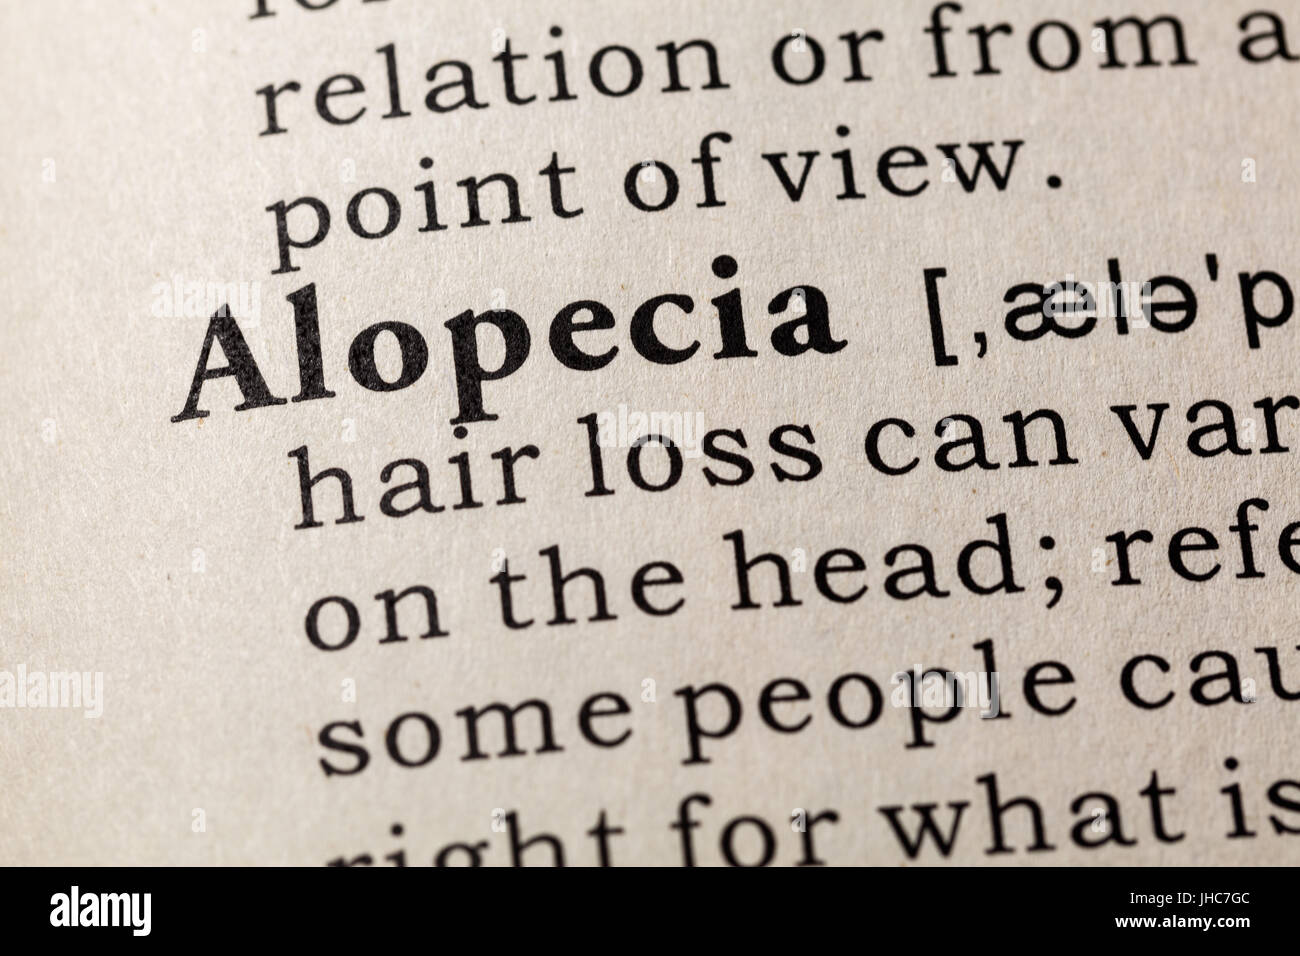 Fake Dictionary, Dictionary definition of the word Alopecia. including key descriptive words. Stock Photo